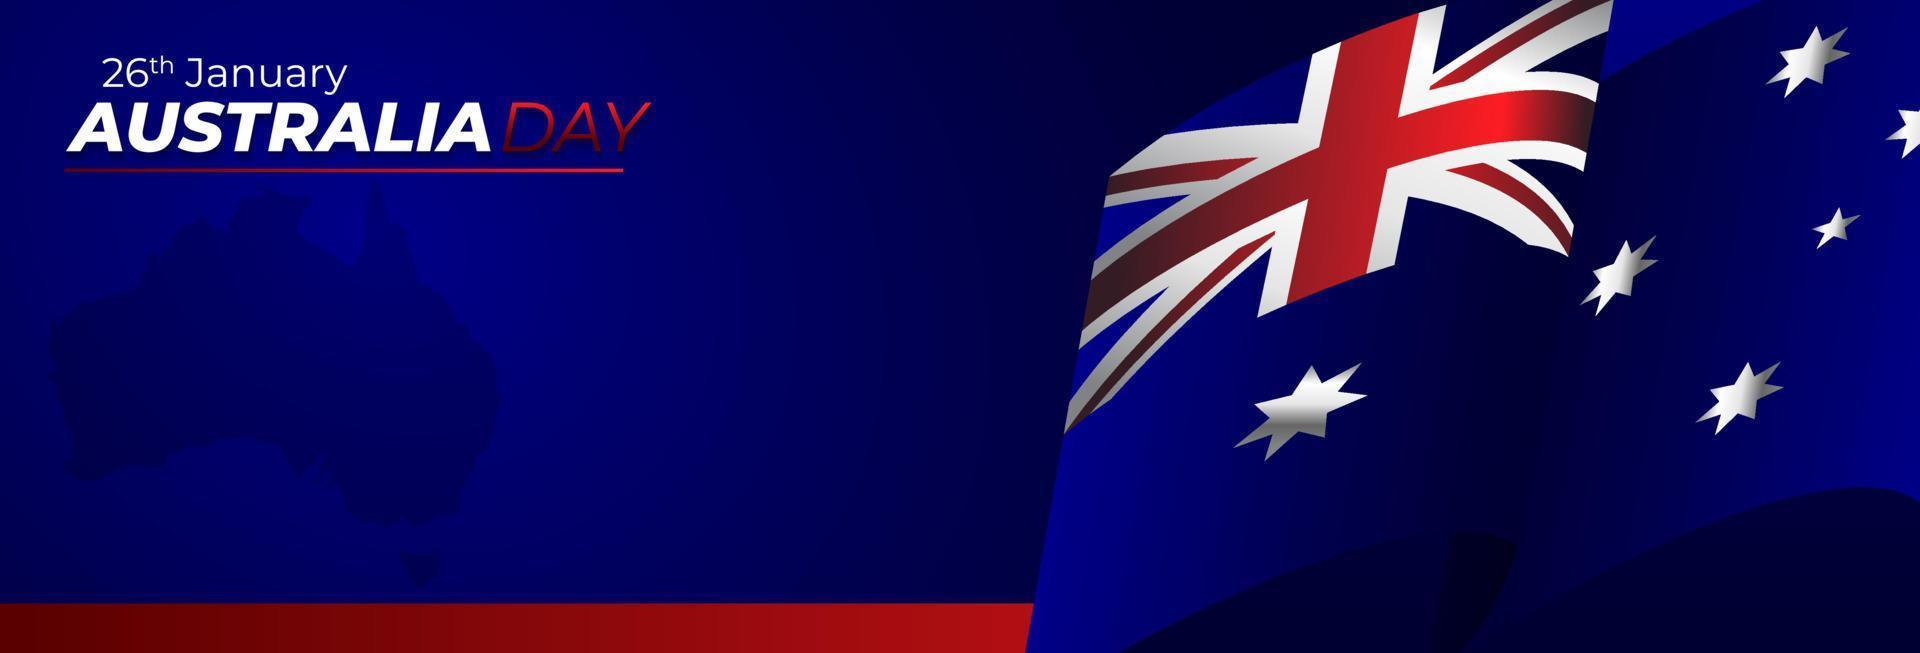 australien tag banner vektor hintergrundillustration, feier der australischen feiertagsnation am 26. januar